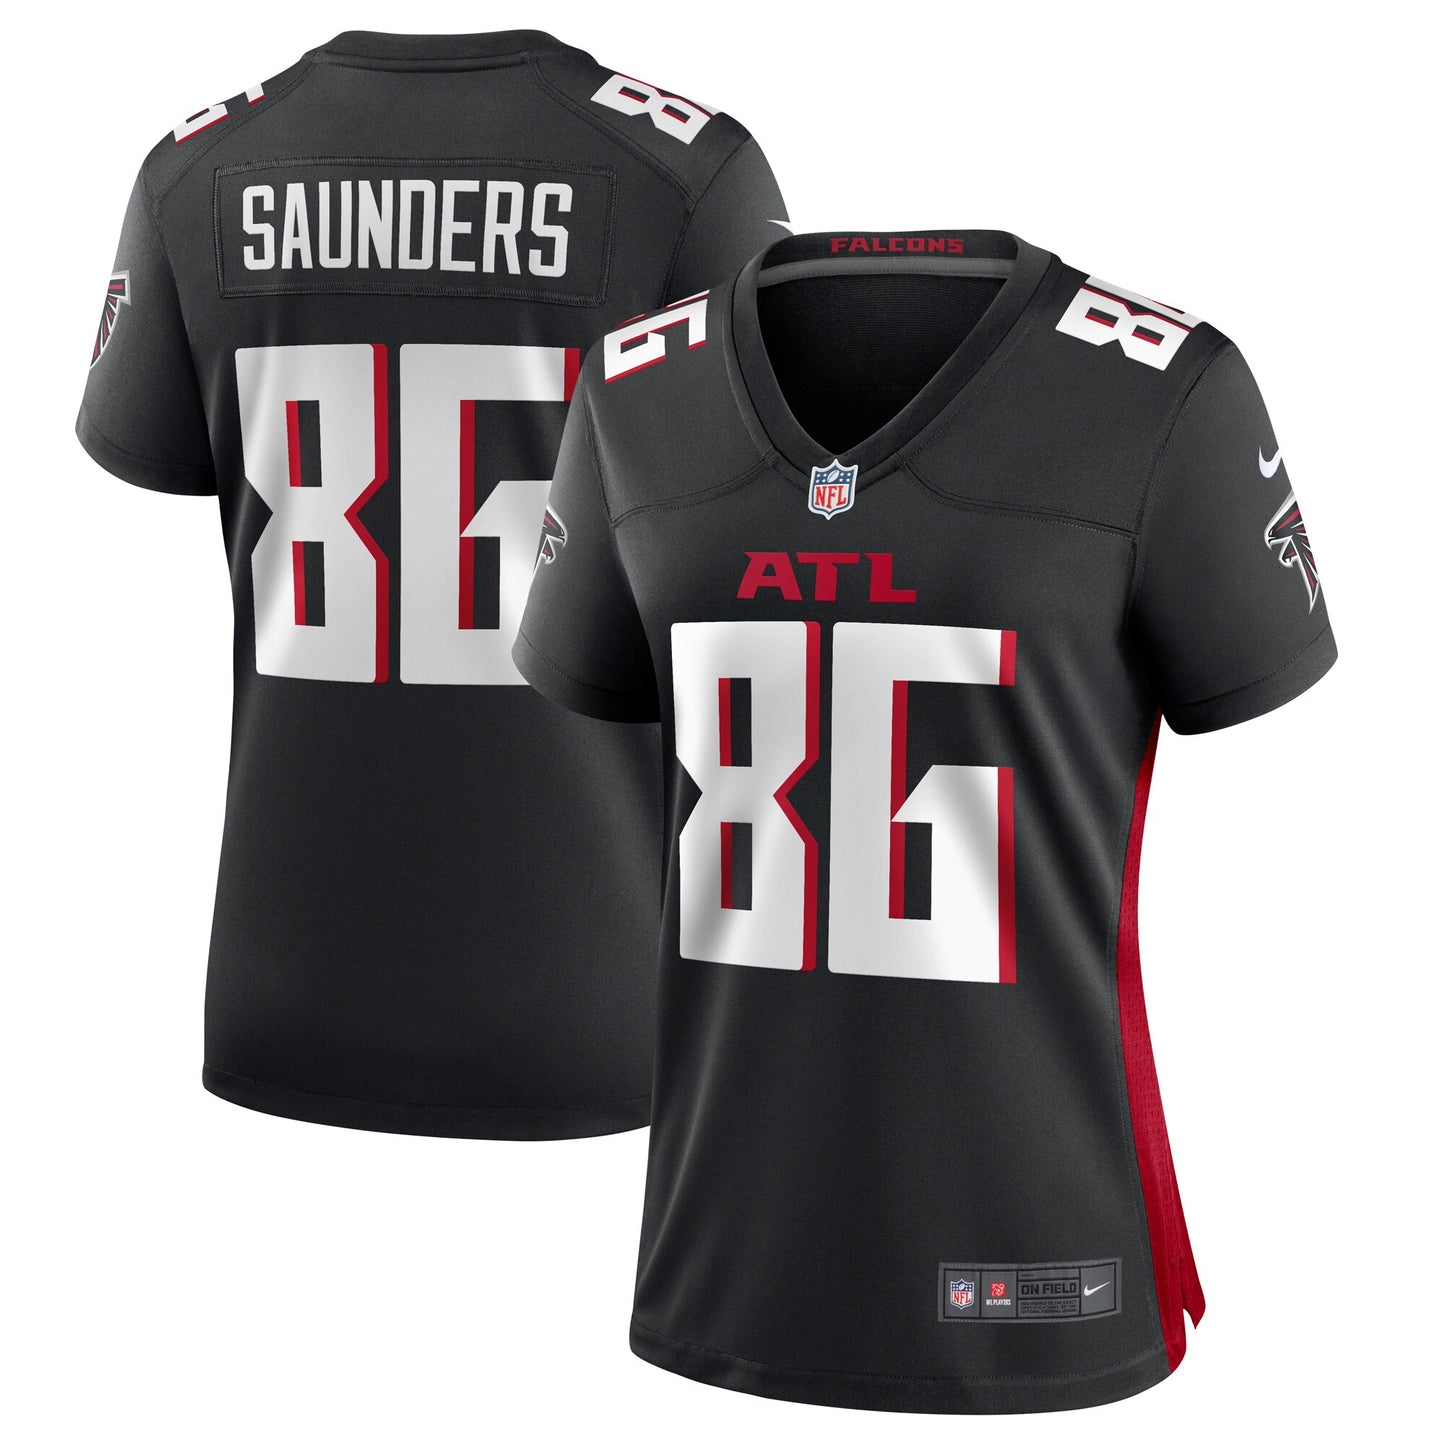 CJ Saunders Atlanta Falcons Nike Women's Team Game Jersey -  Black